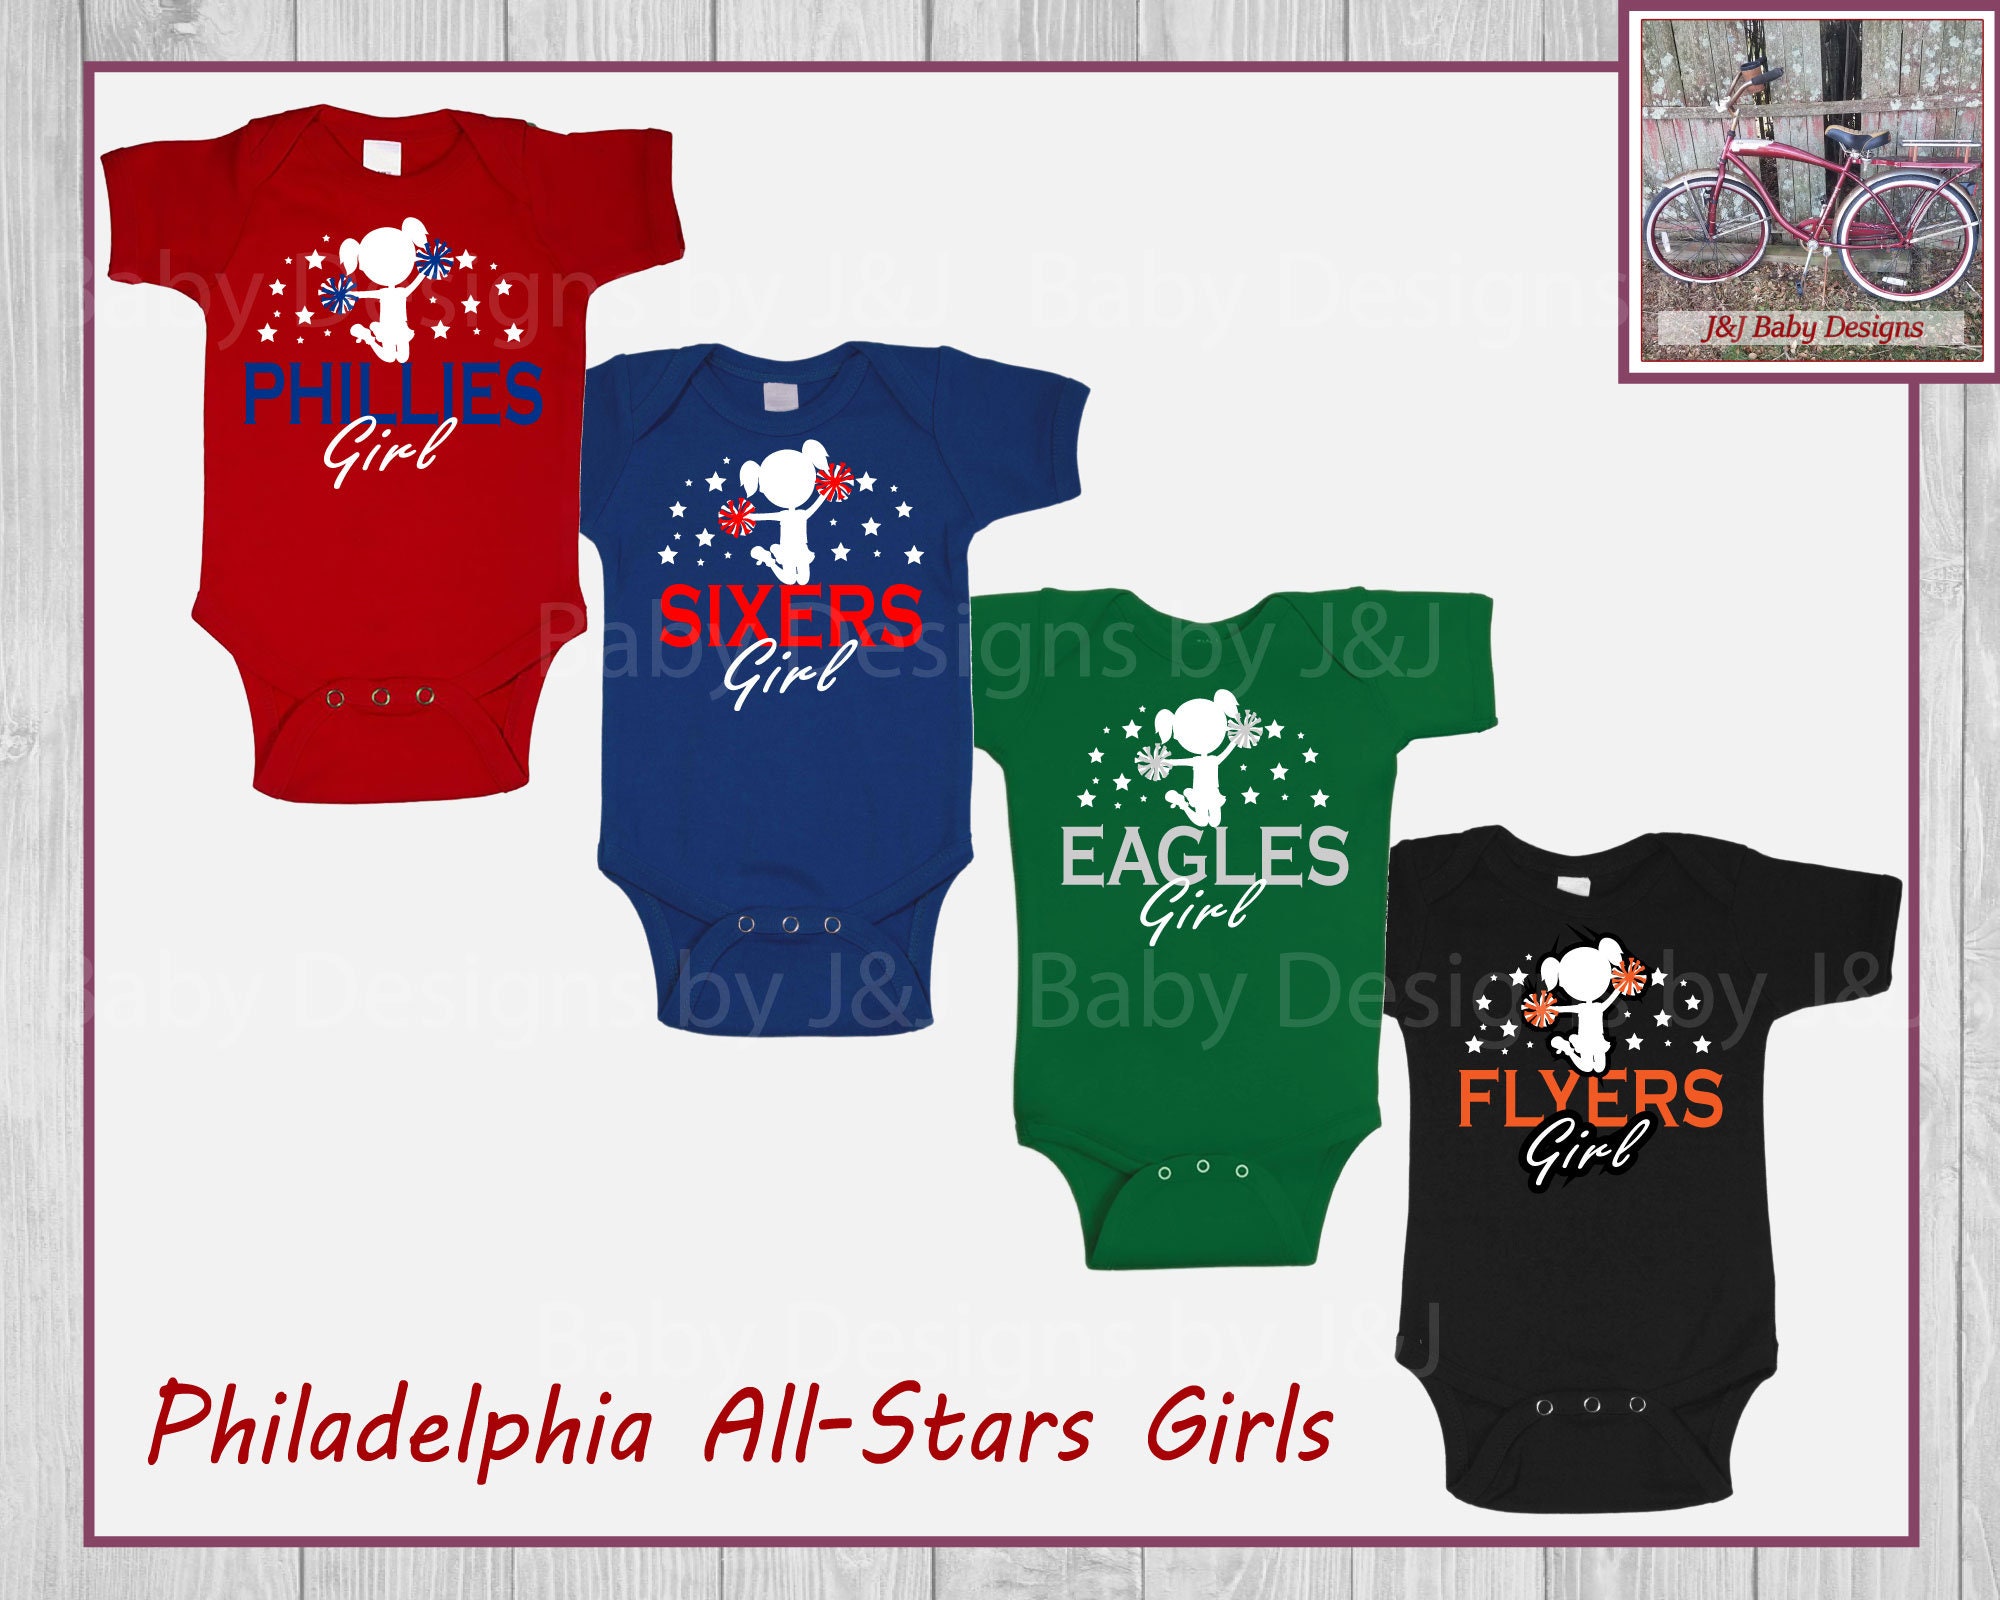 Philadelphia Eagles 76ers Phillies Flyers 3D Hawaiian Shirt